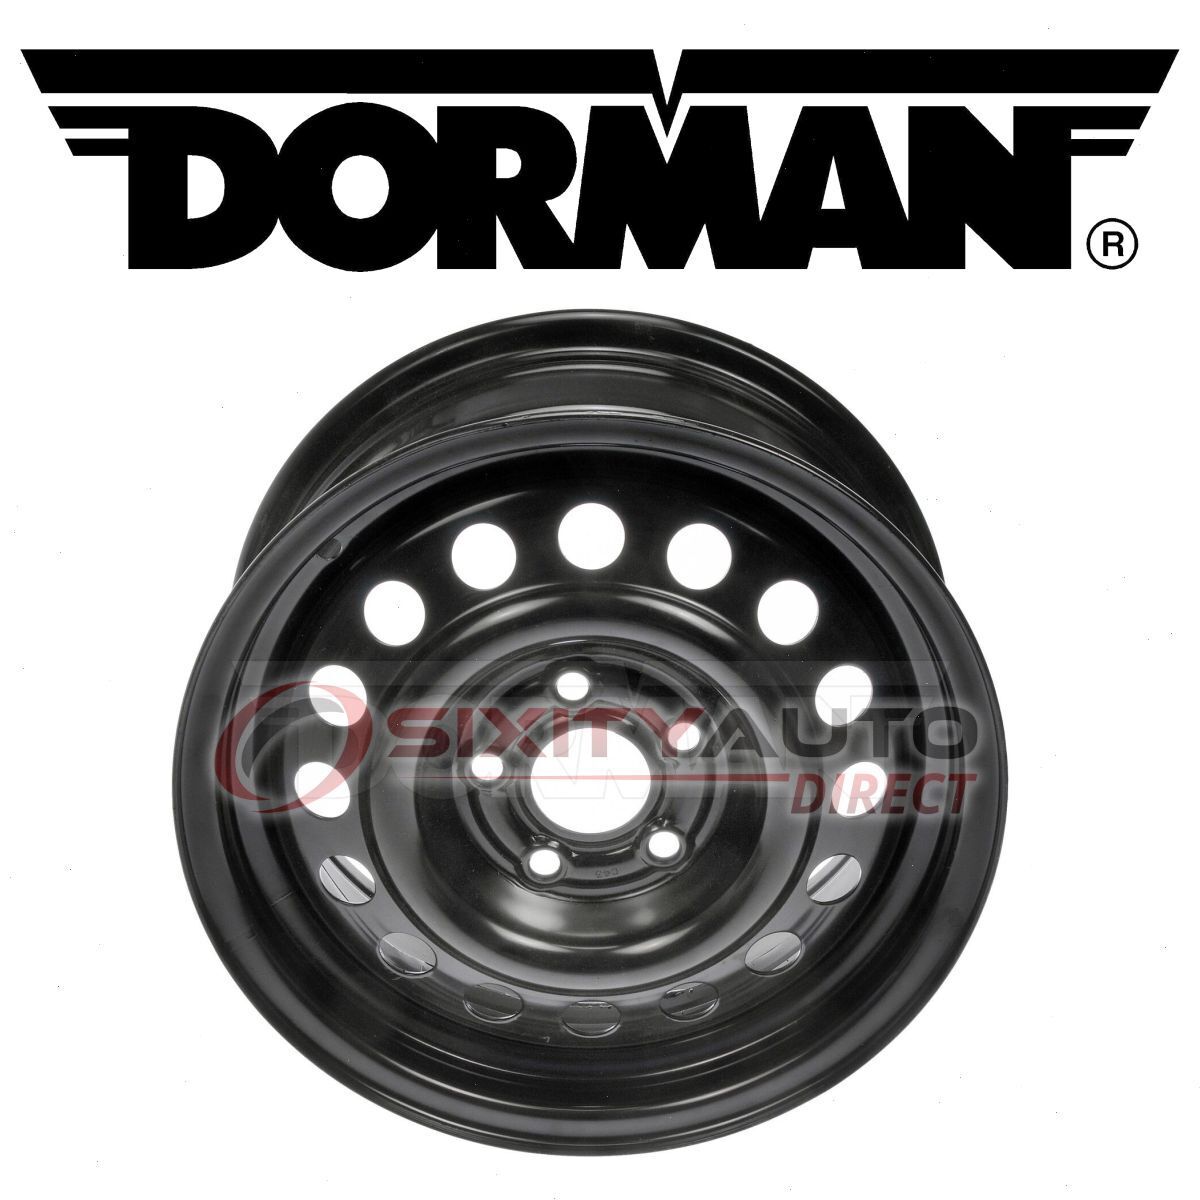 Dorman Wheel for 1987-1996 Chevrolet Beretta Tire  lc